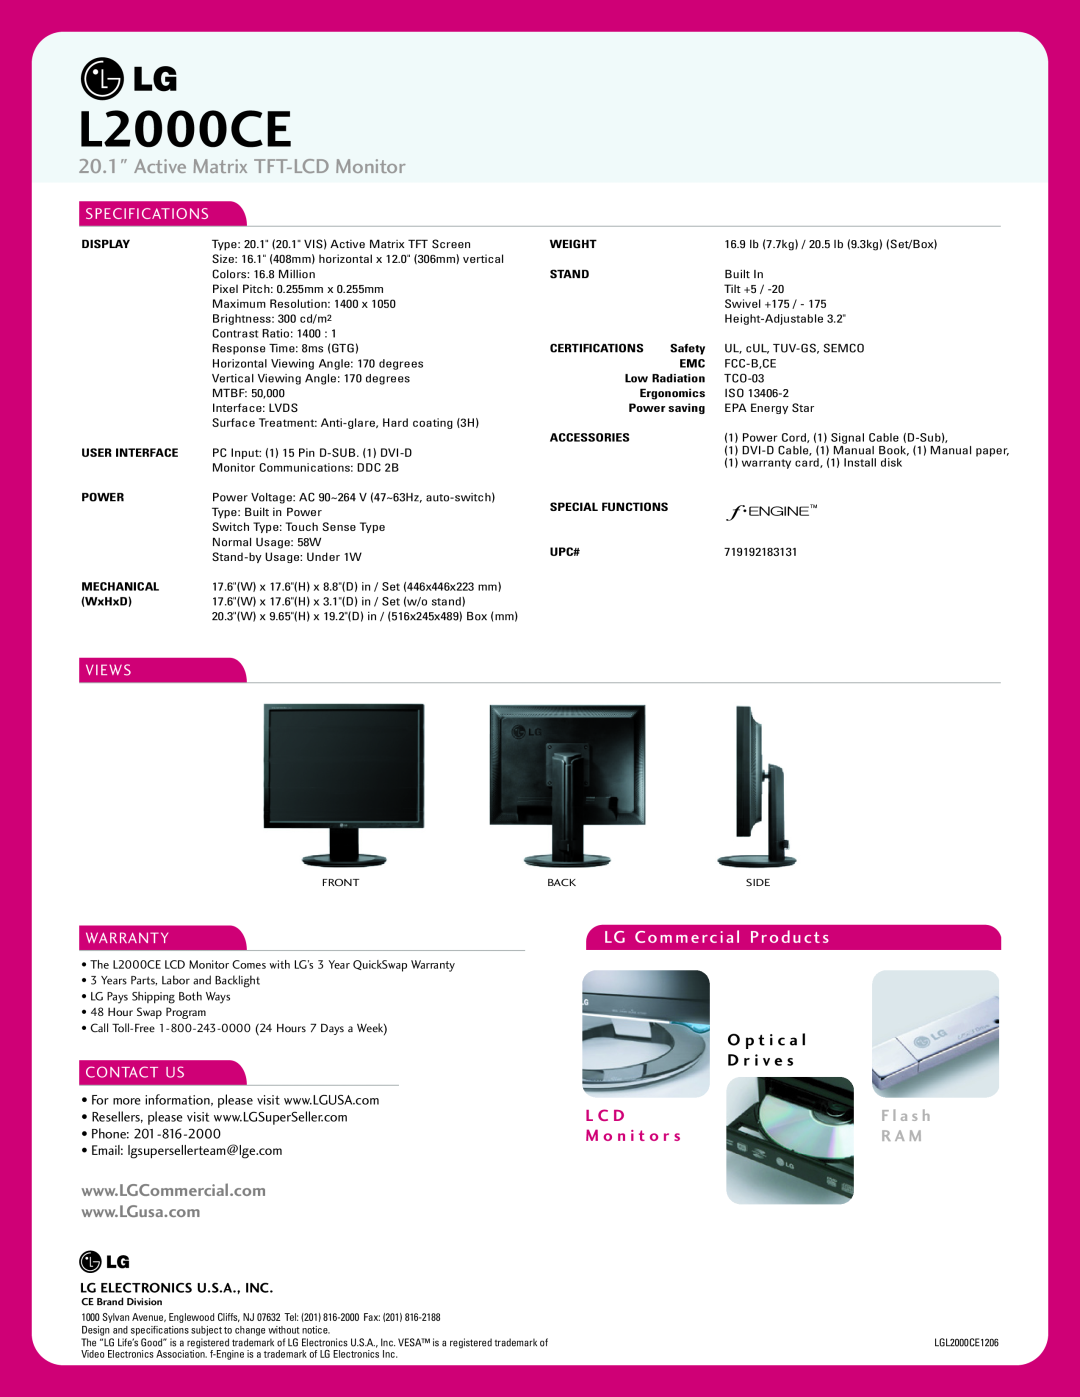 LG Electronics L2000CE Active Matrix TFT-LCD Monitor, LG Commercial Products, O p t i c a l D r i v e s, L C D, R A M 